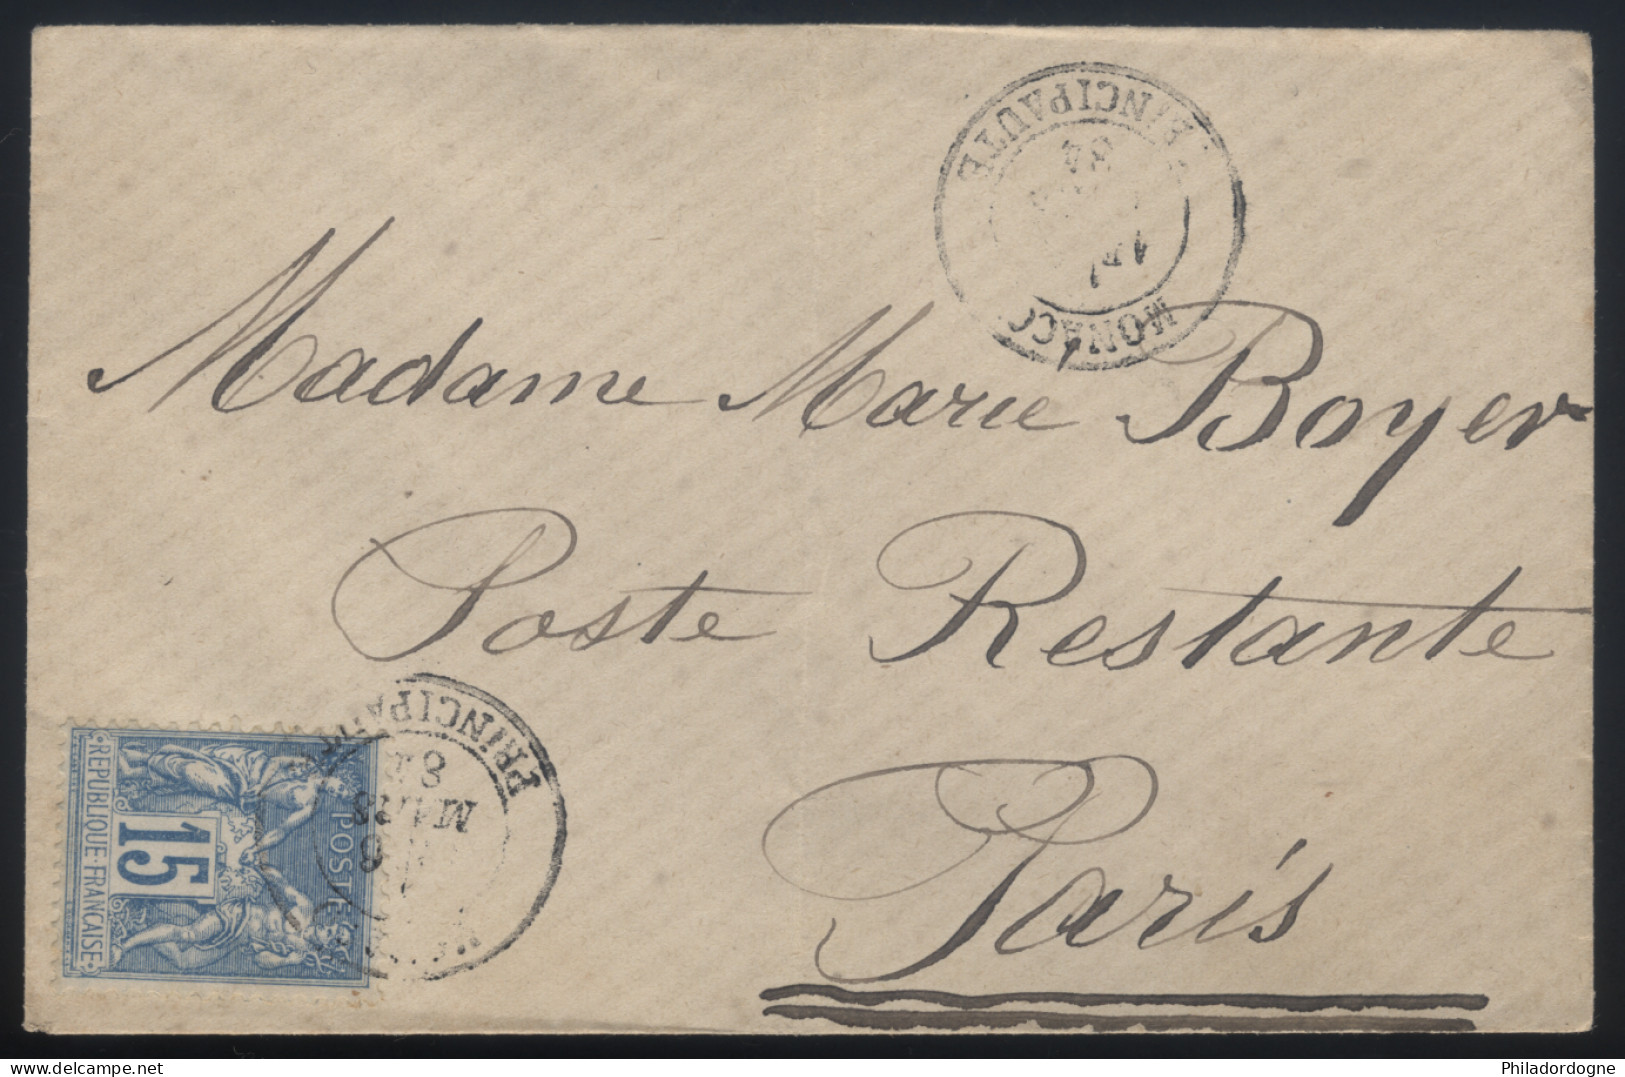 Monaco - Yvert N° 90 Obl. Monaco Principauté (Ga) Seul Sur LsC Pour Paris En Poste Restante 06/03/1884 - Cote 600 Euros - ...-1885 Precursores